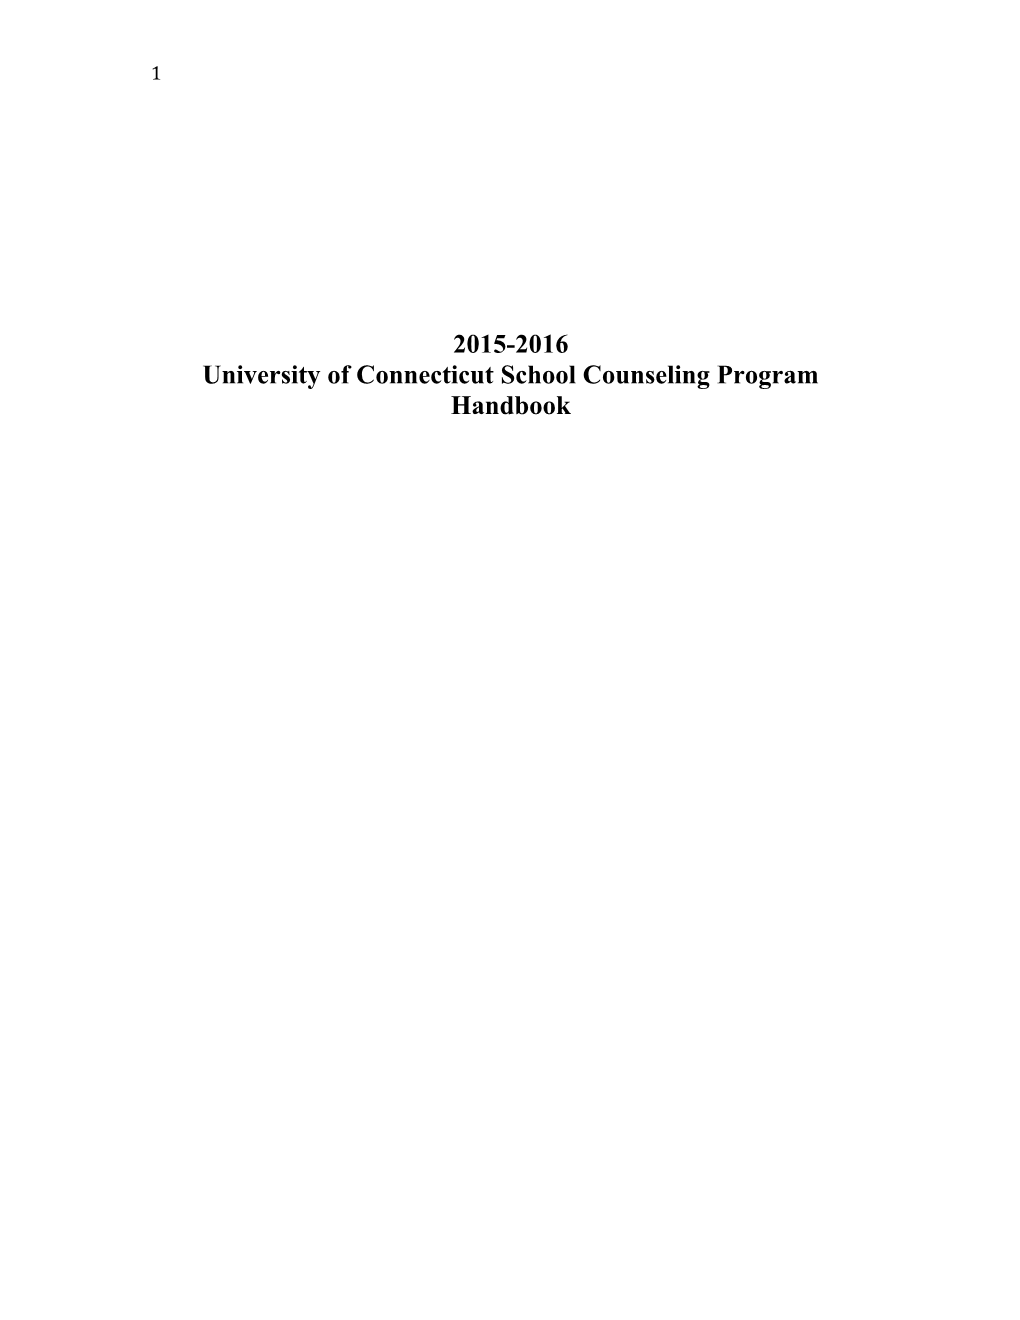 University of Connecticut School Counseling Program Handbook